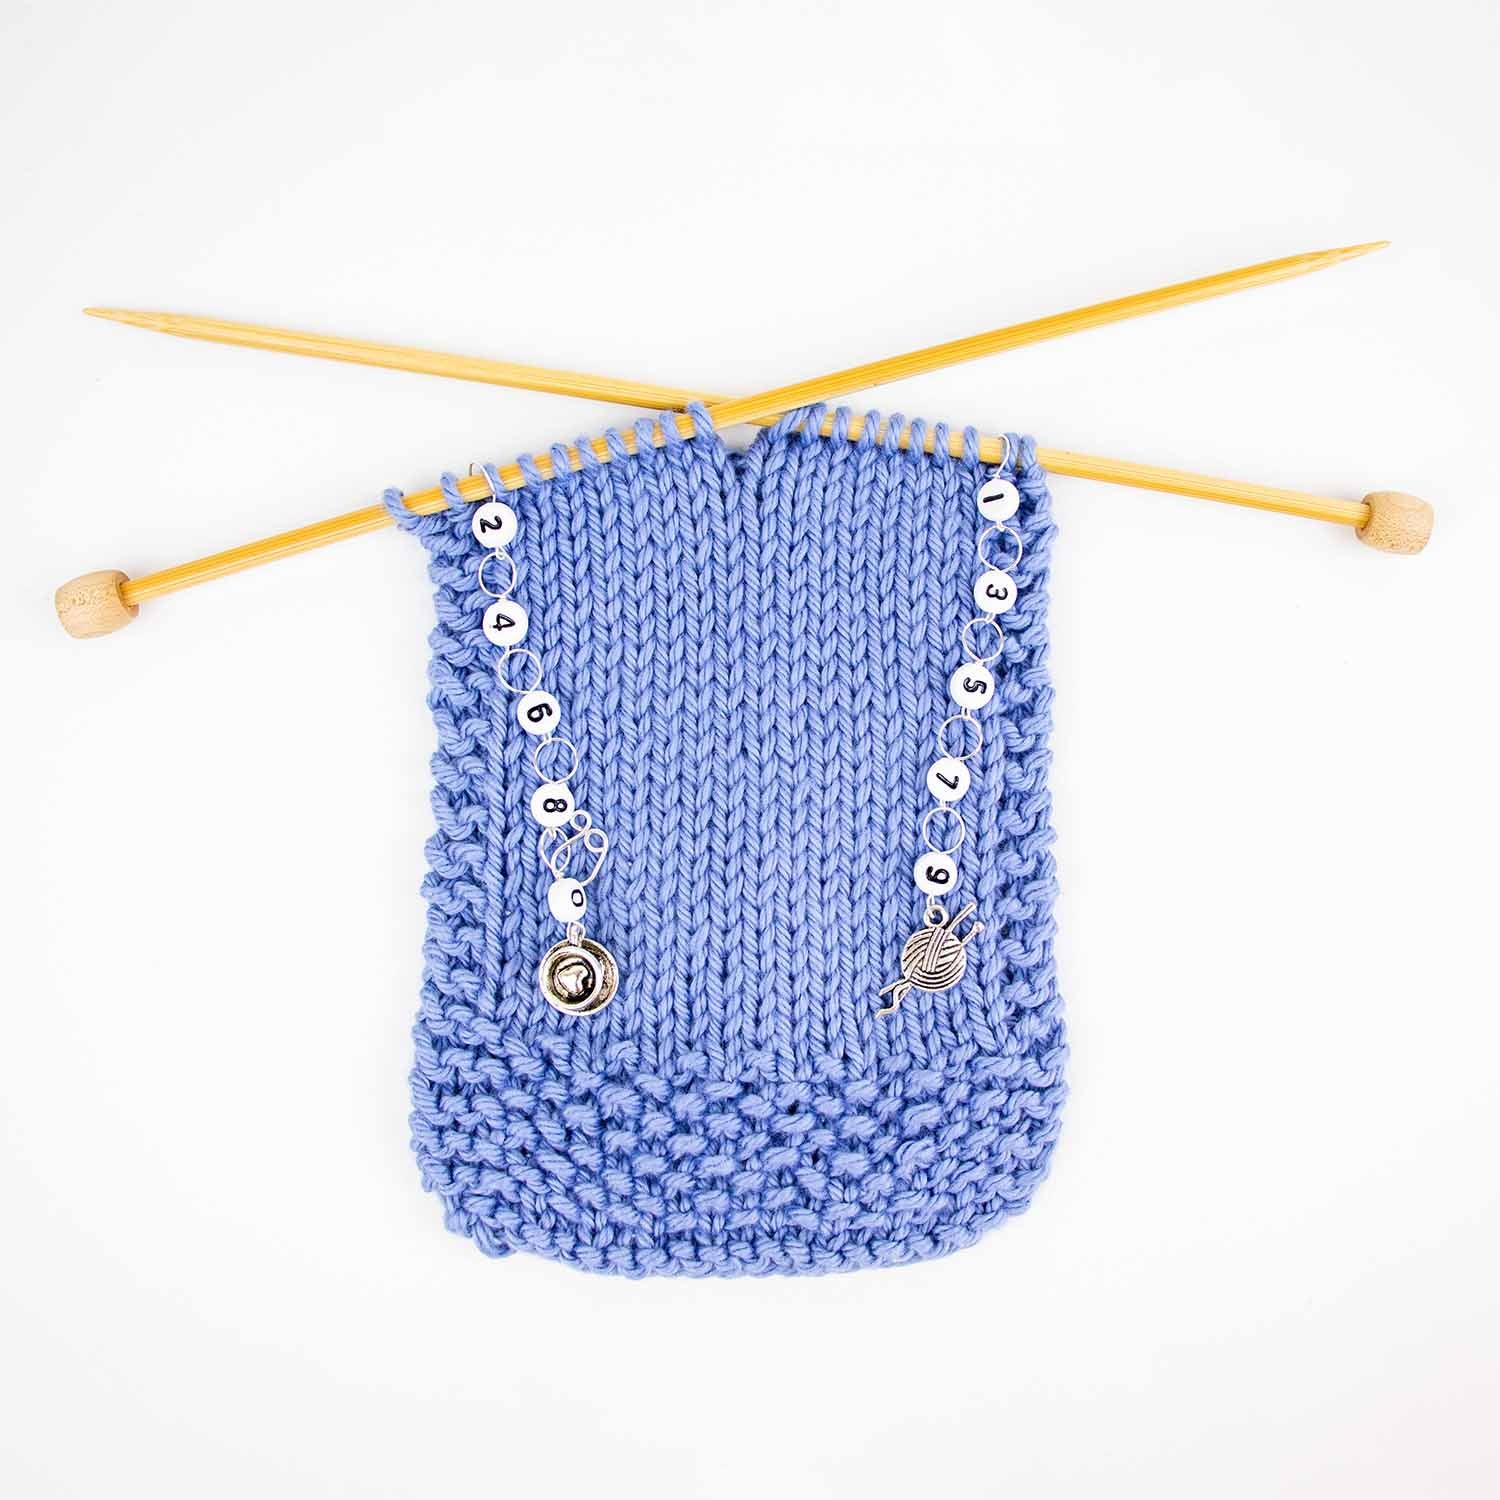 Knitting and Crochet Row Counter Bundle